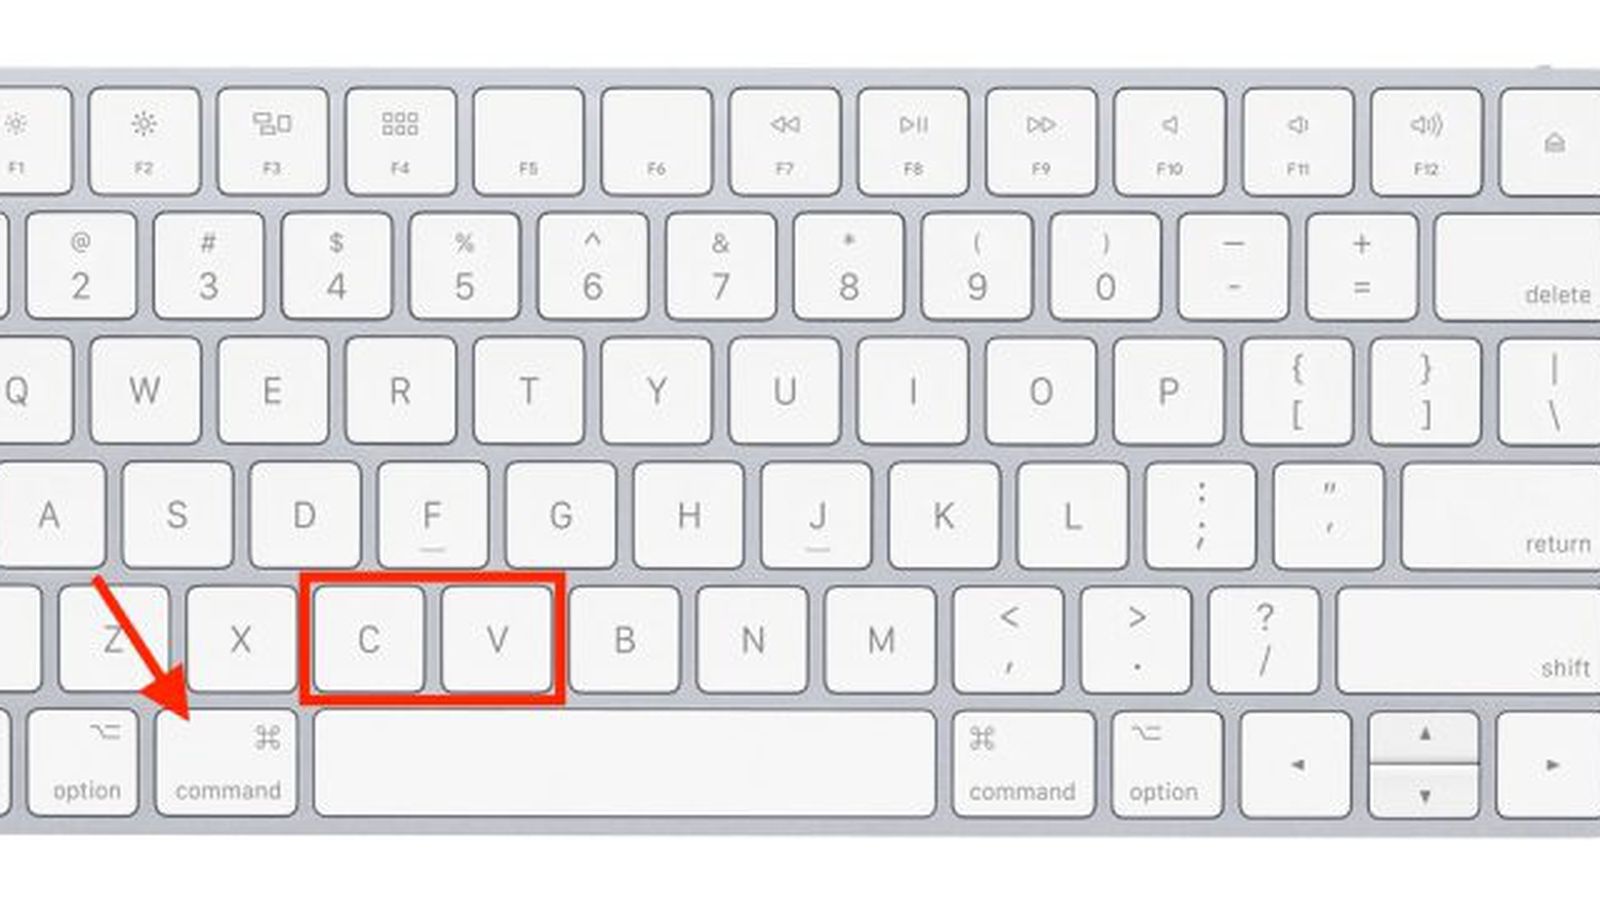 apple keyboard shortcut for paste